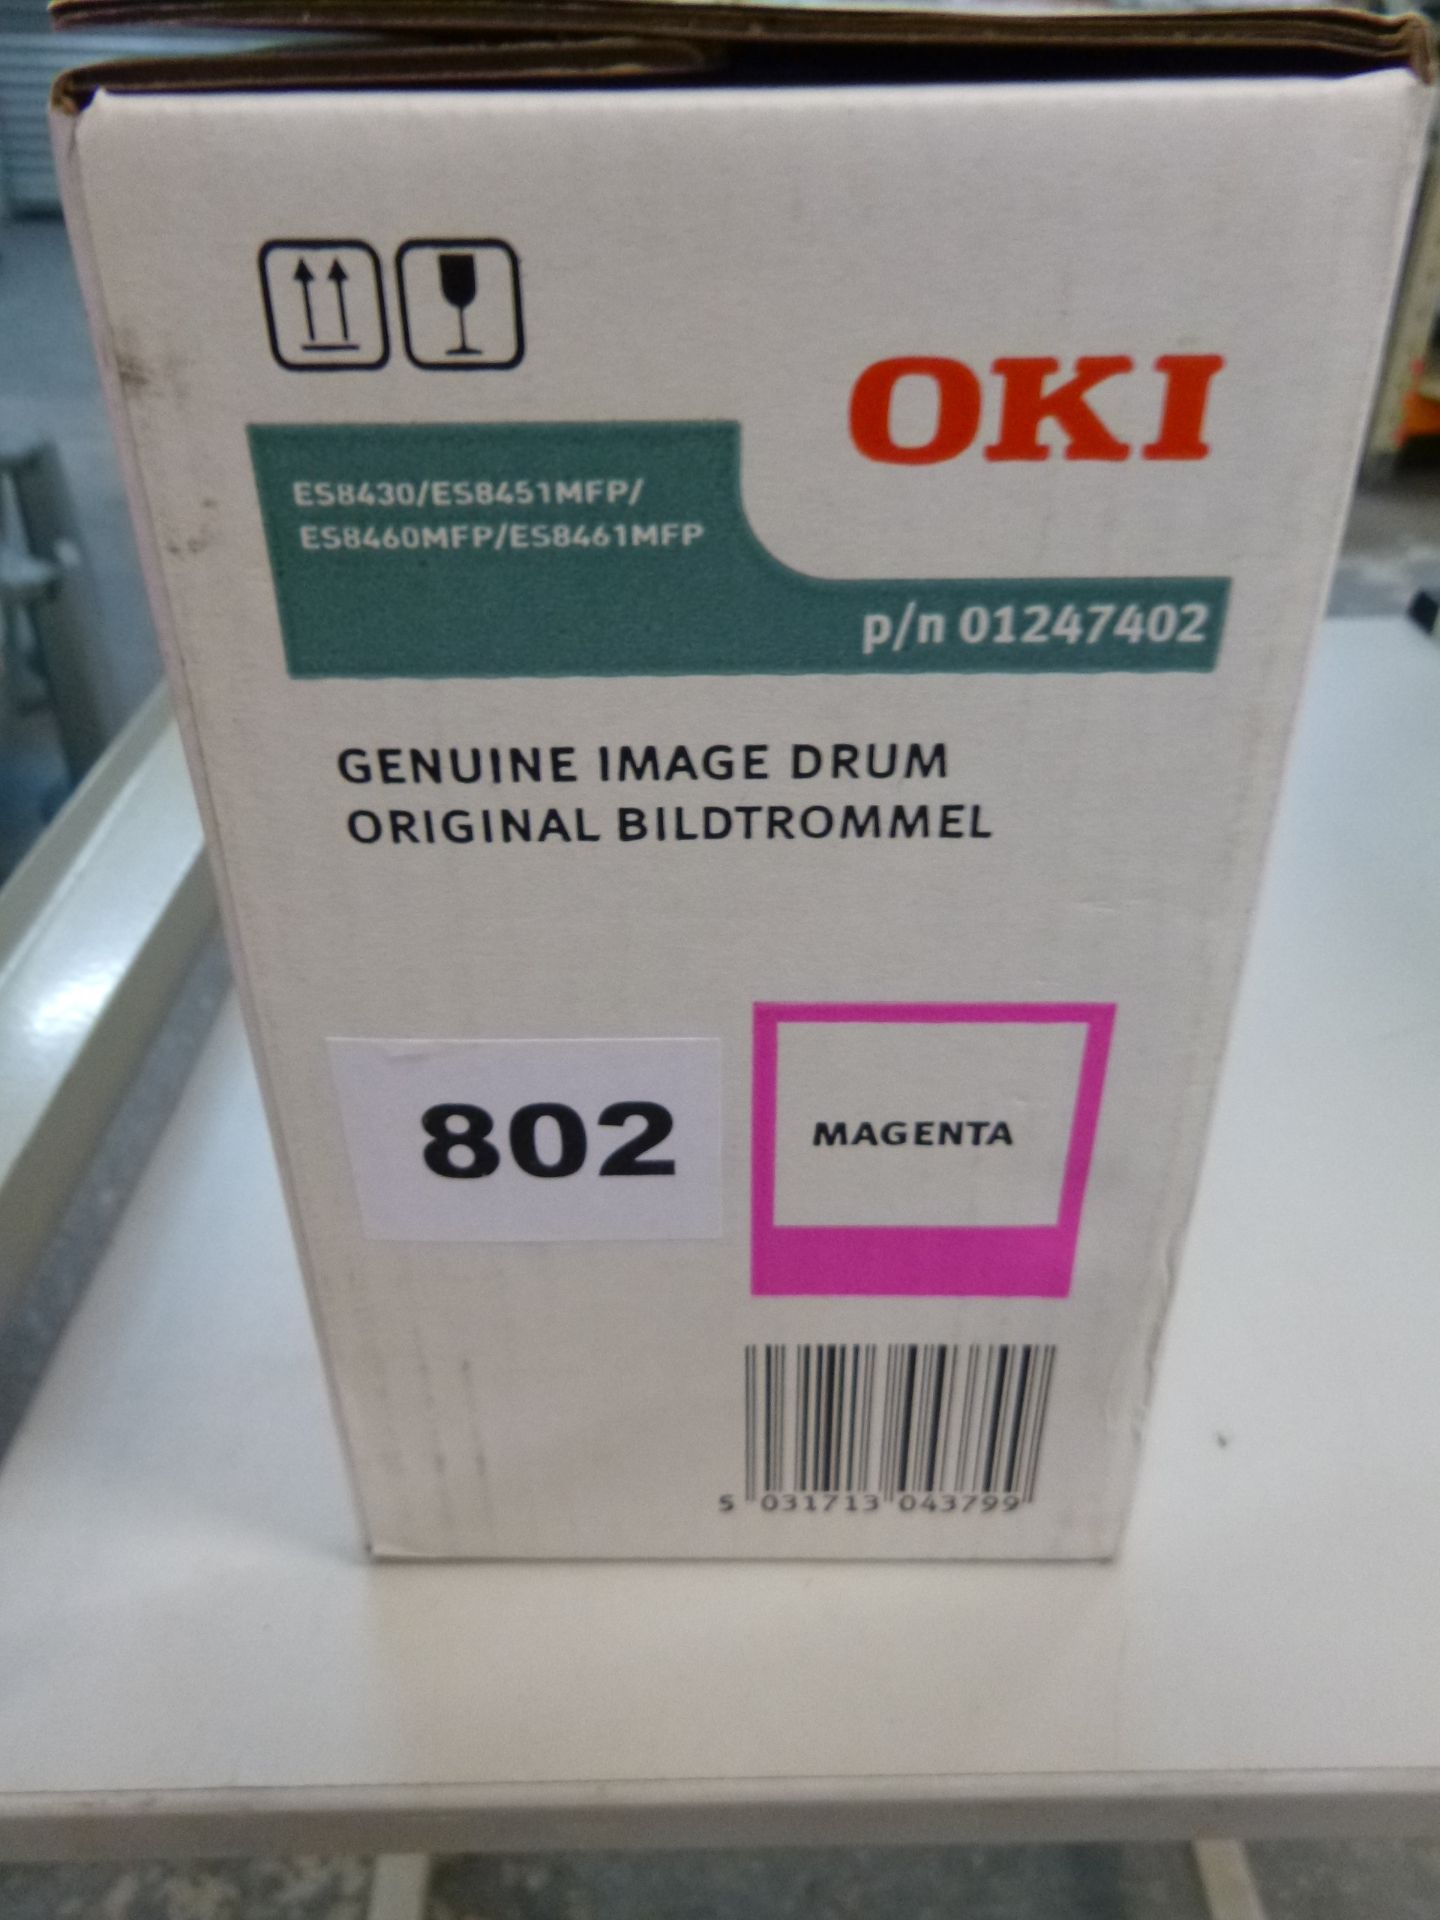 OKI GENUINE MAGENTA IMAGE DRUM P/N 01247402. FOR ES8430 / ES8451MFP / ES8460MFP / ES8461MFP